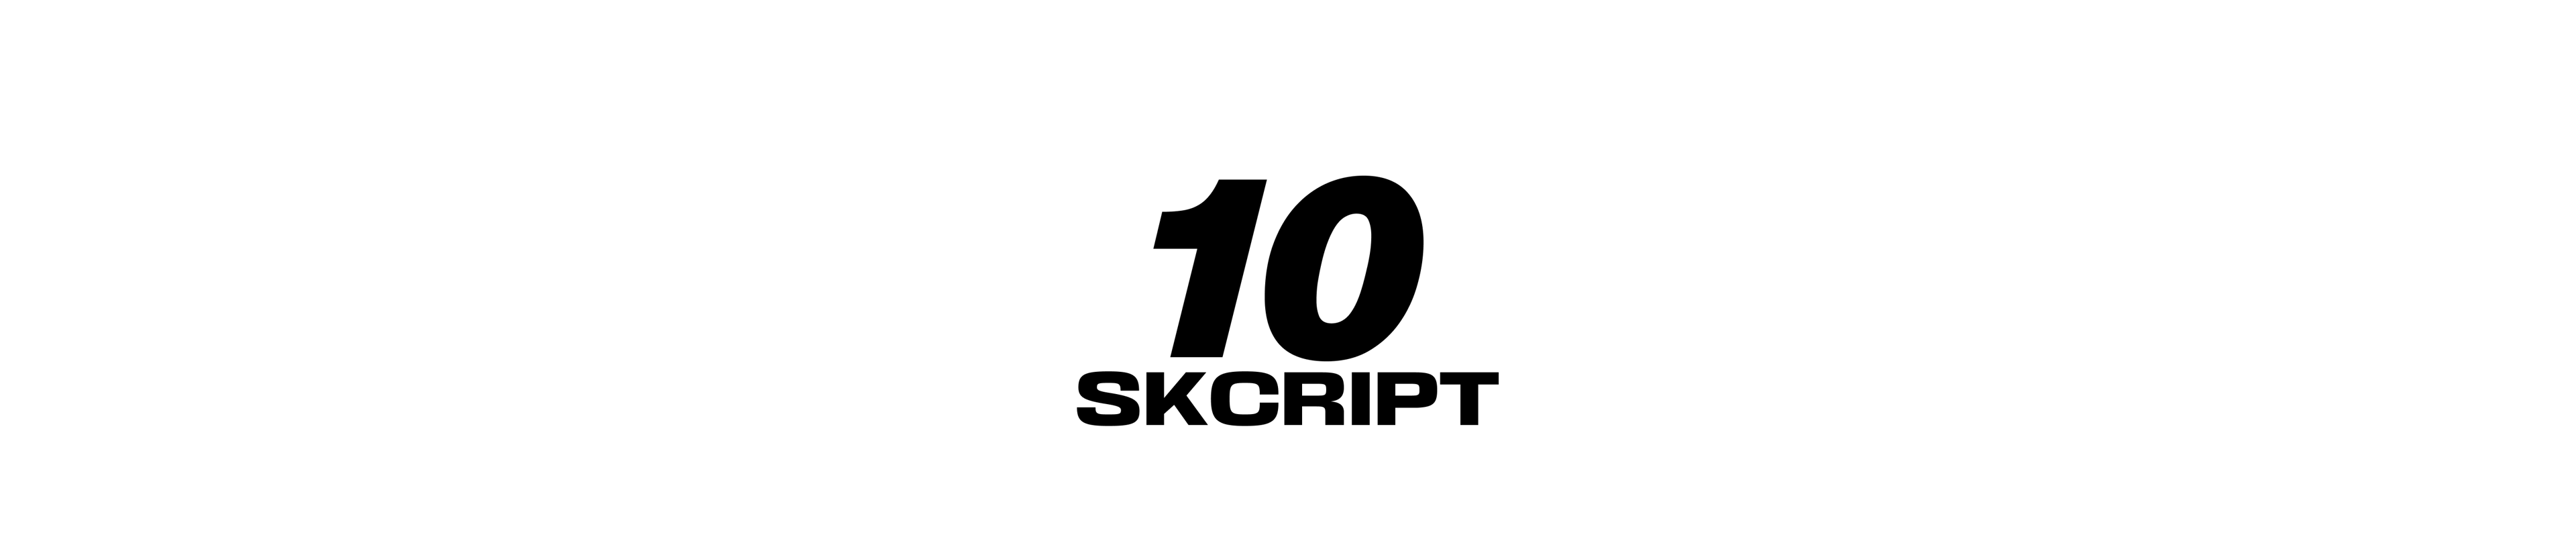 Skcript 10th Anniversary